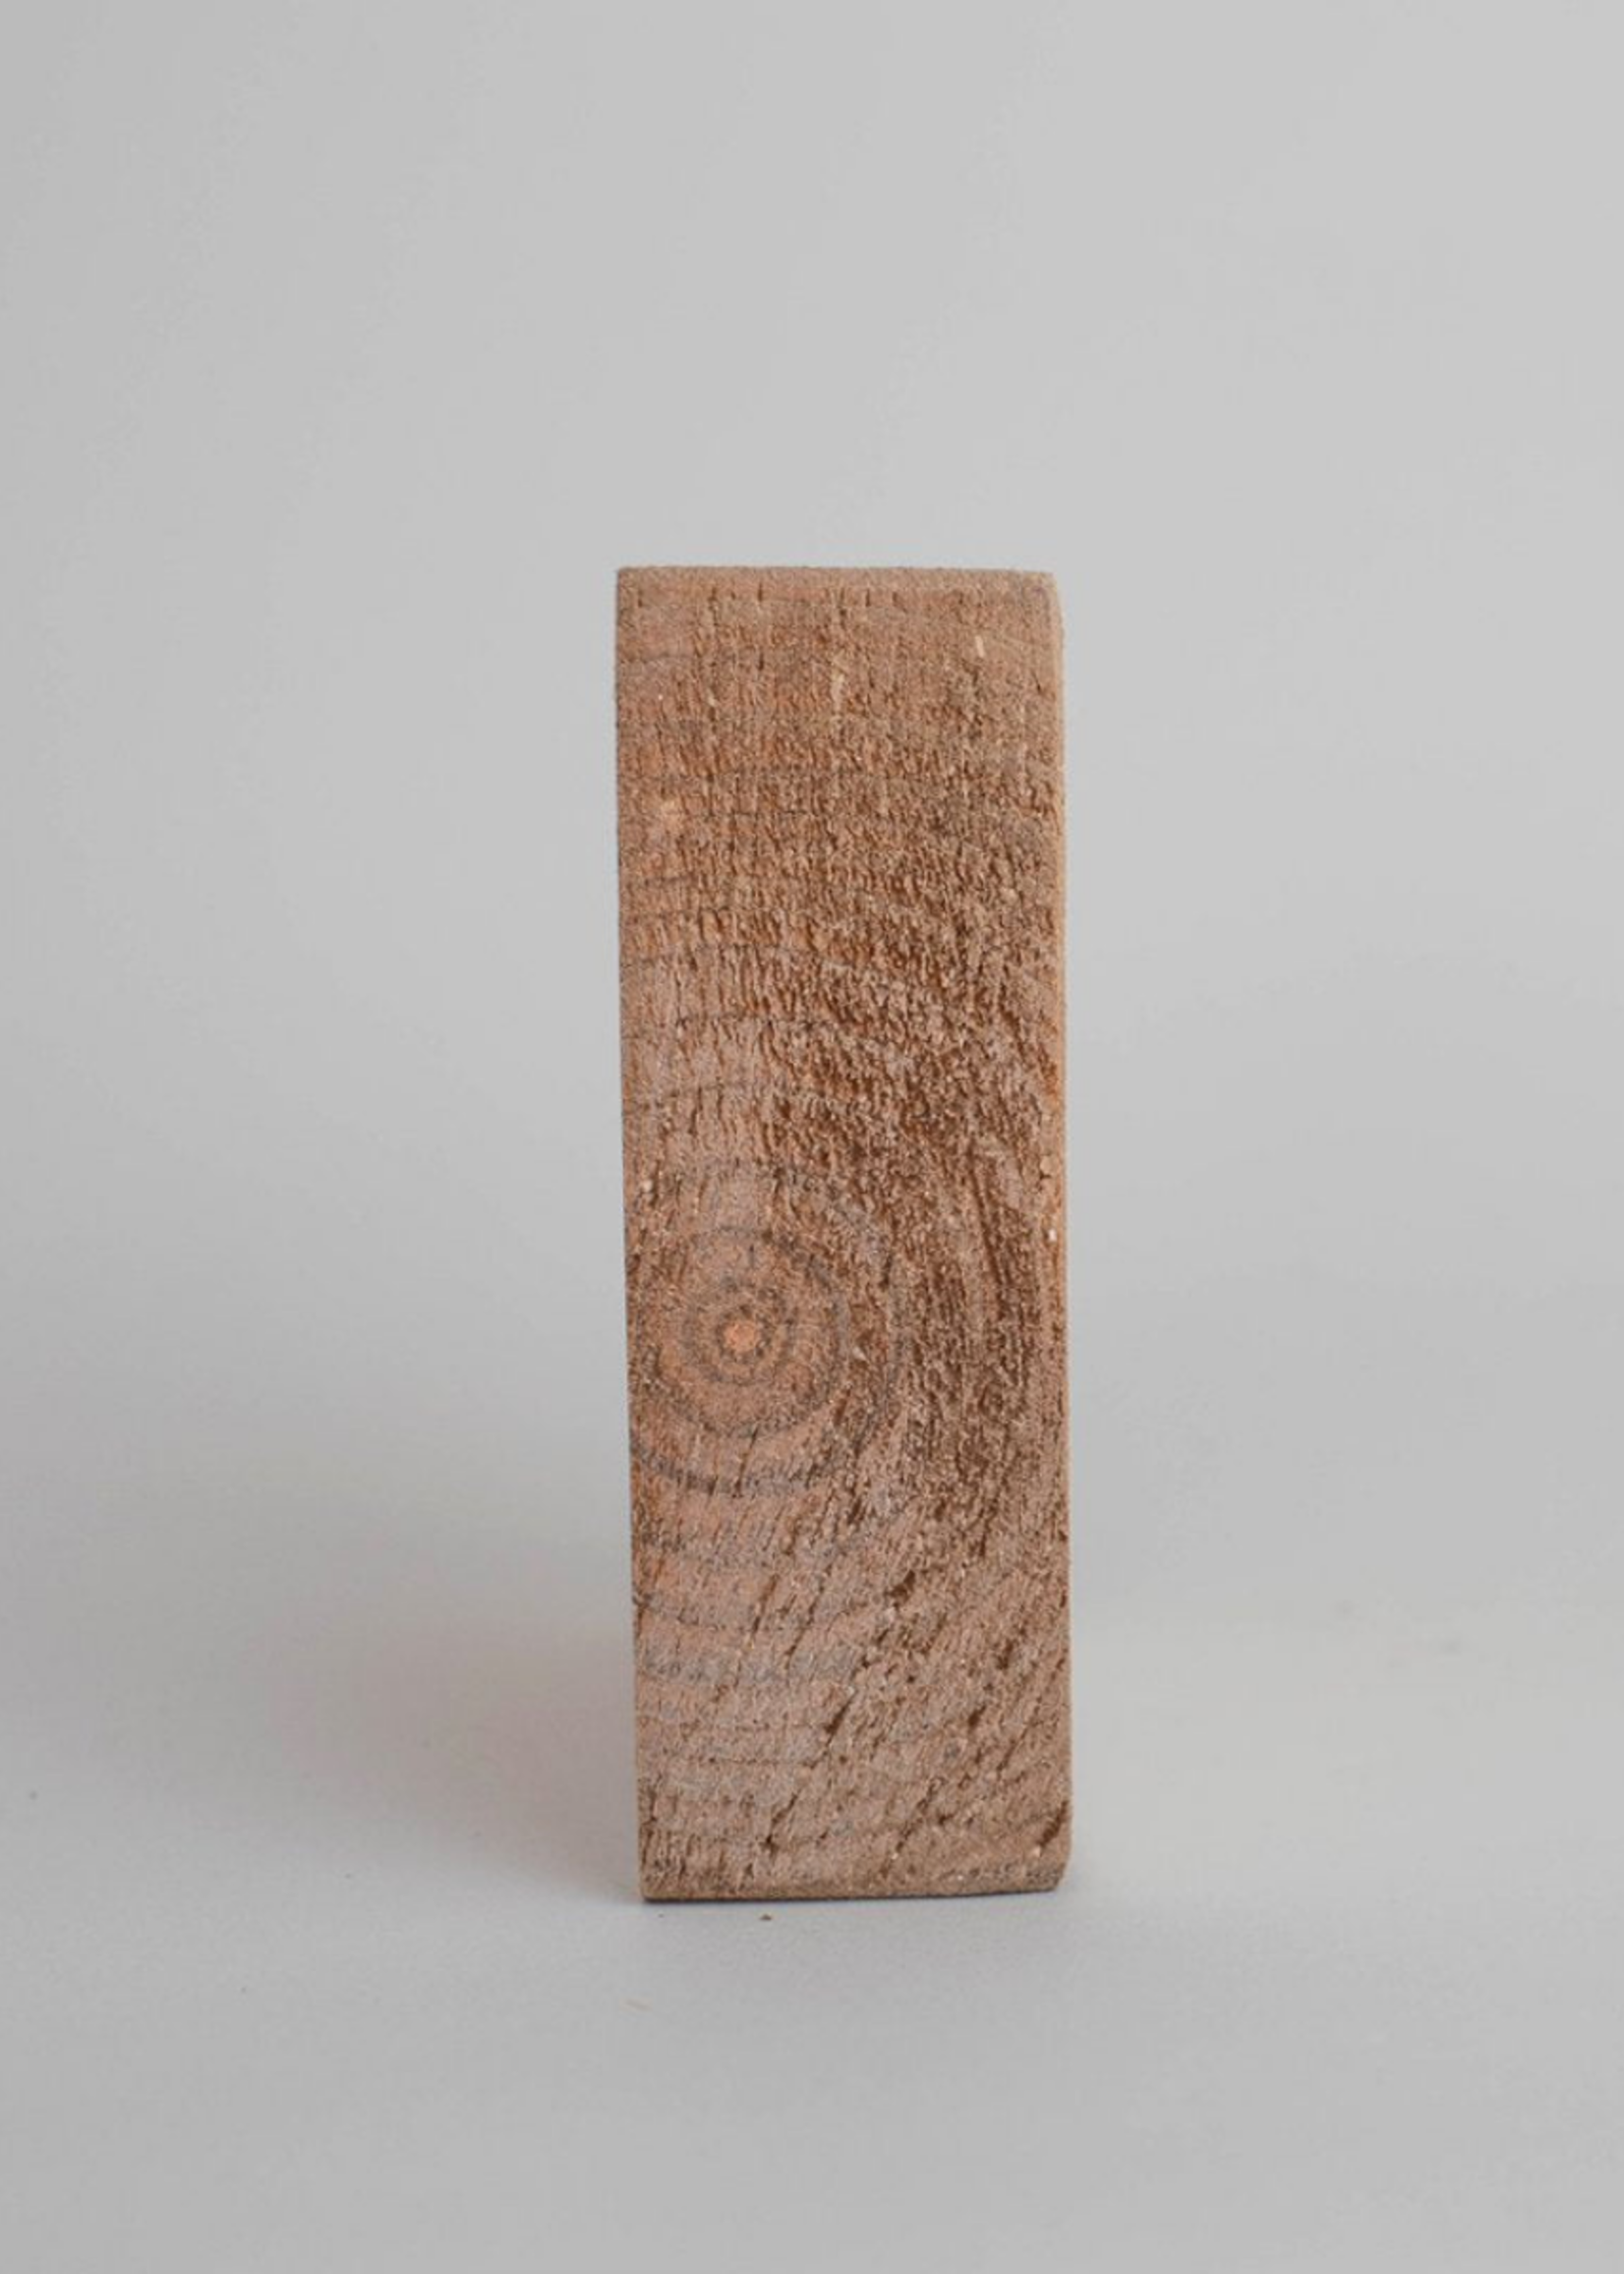 Rustic Marlin Irish Blessing Decorative Wooden Block